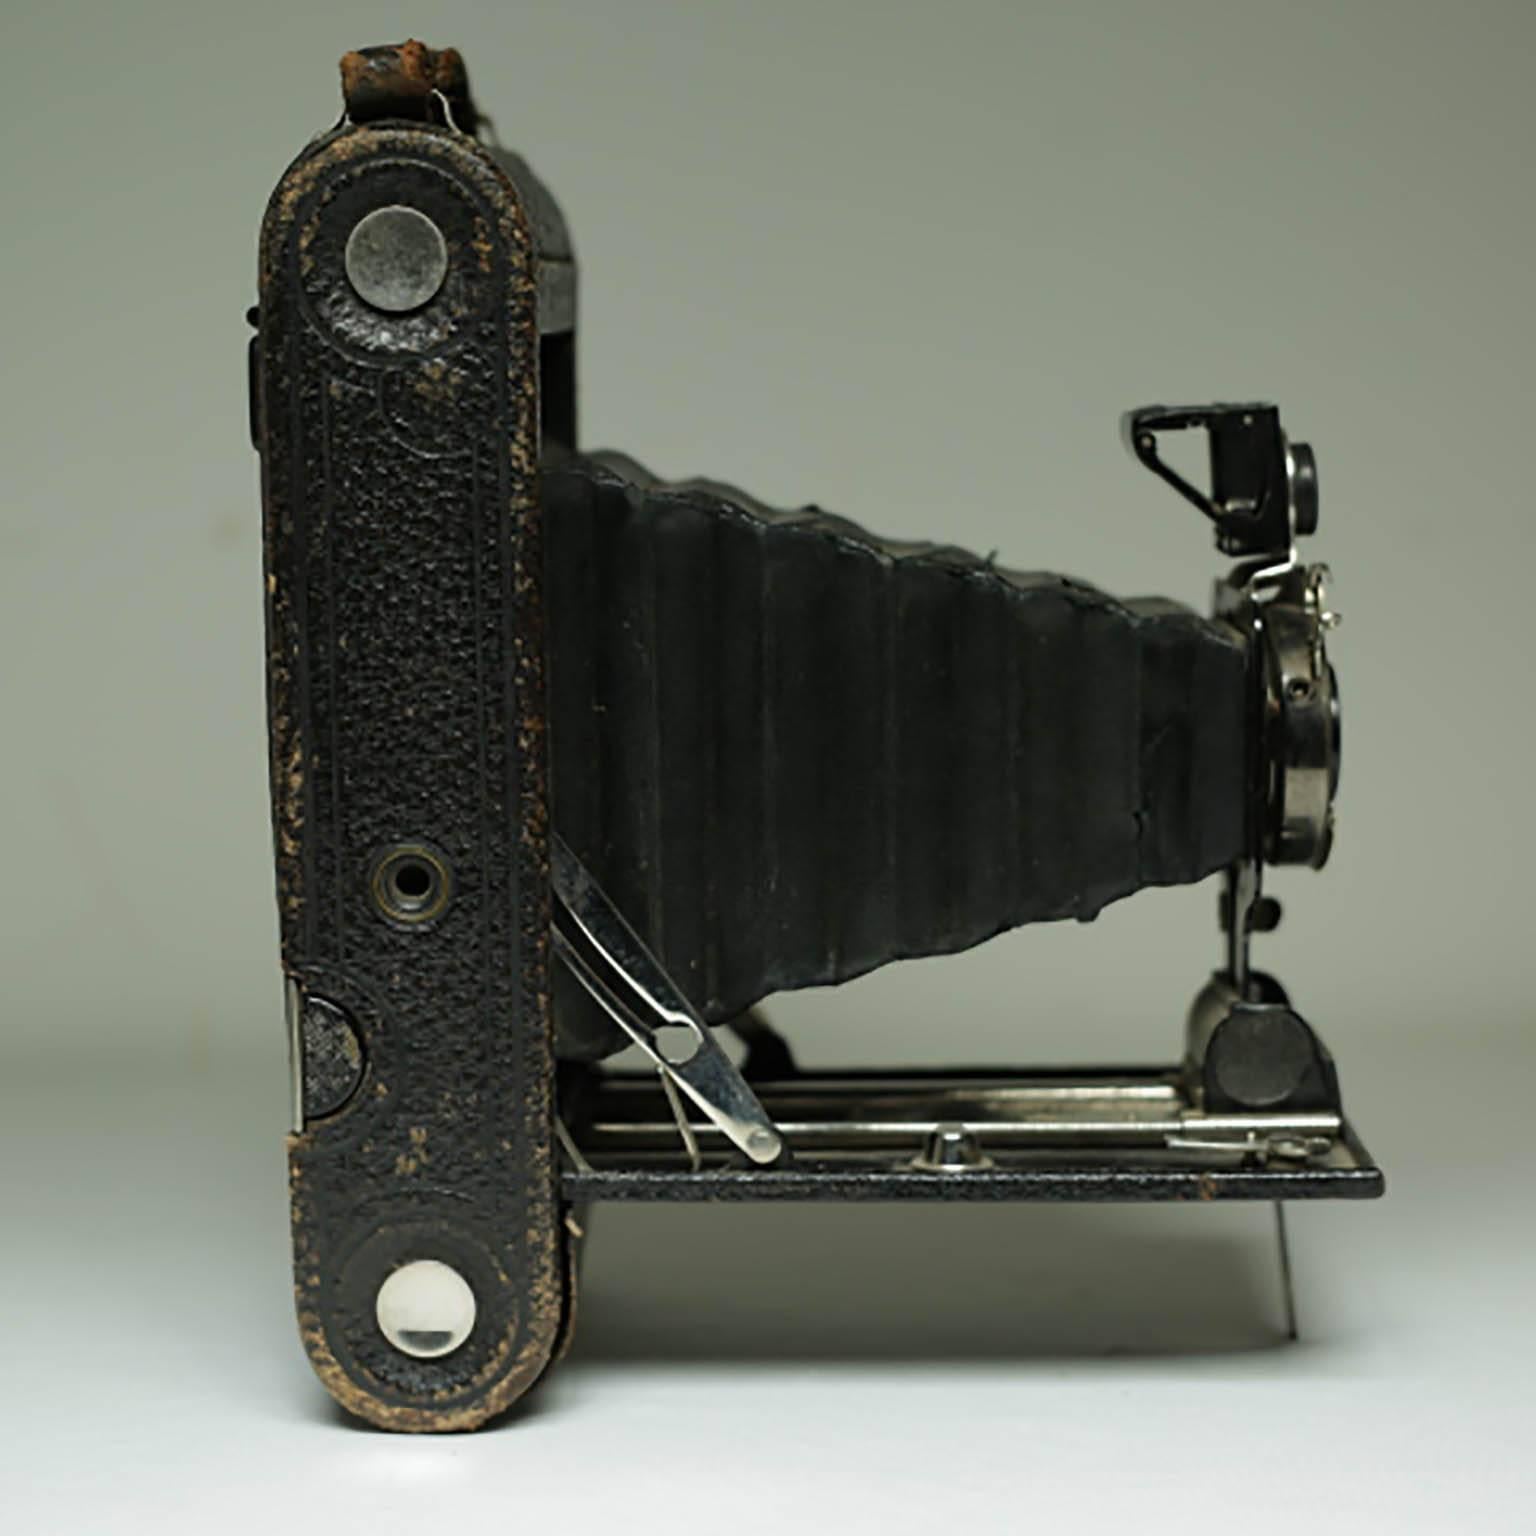 1920s camera